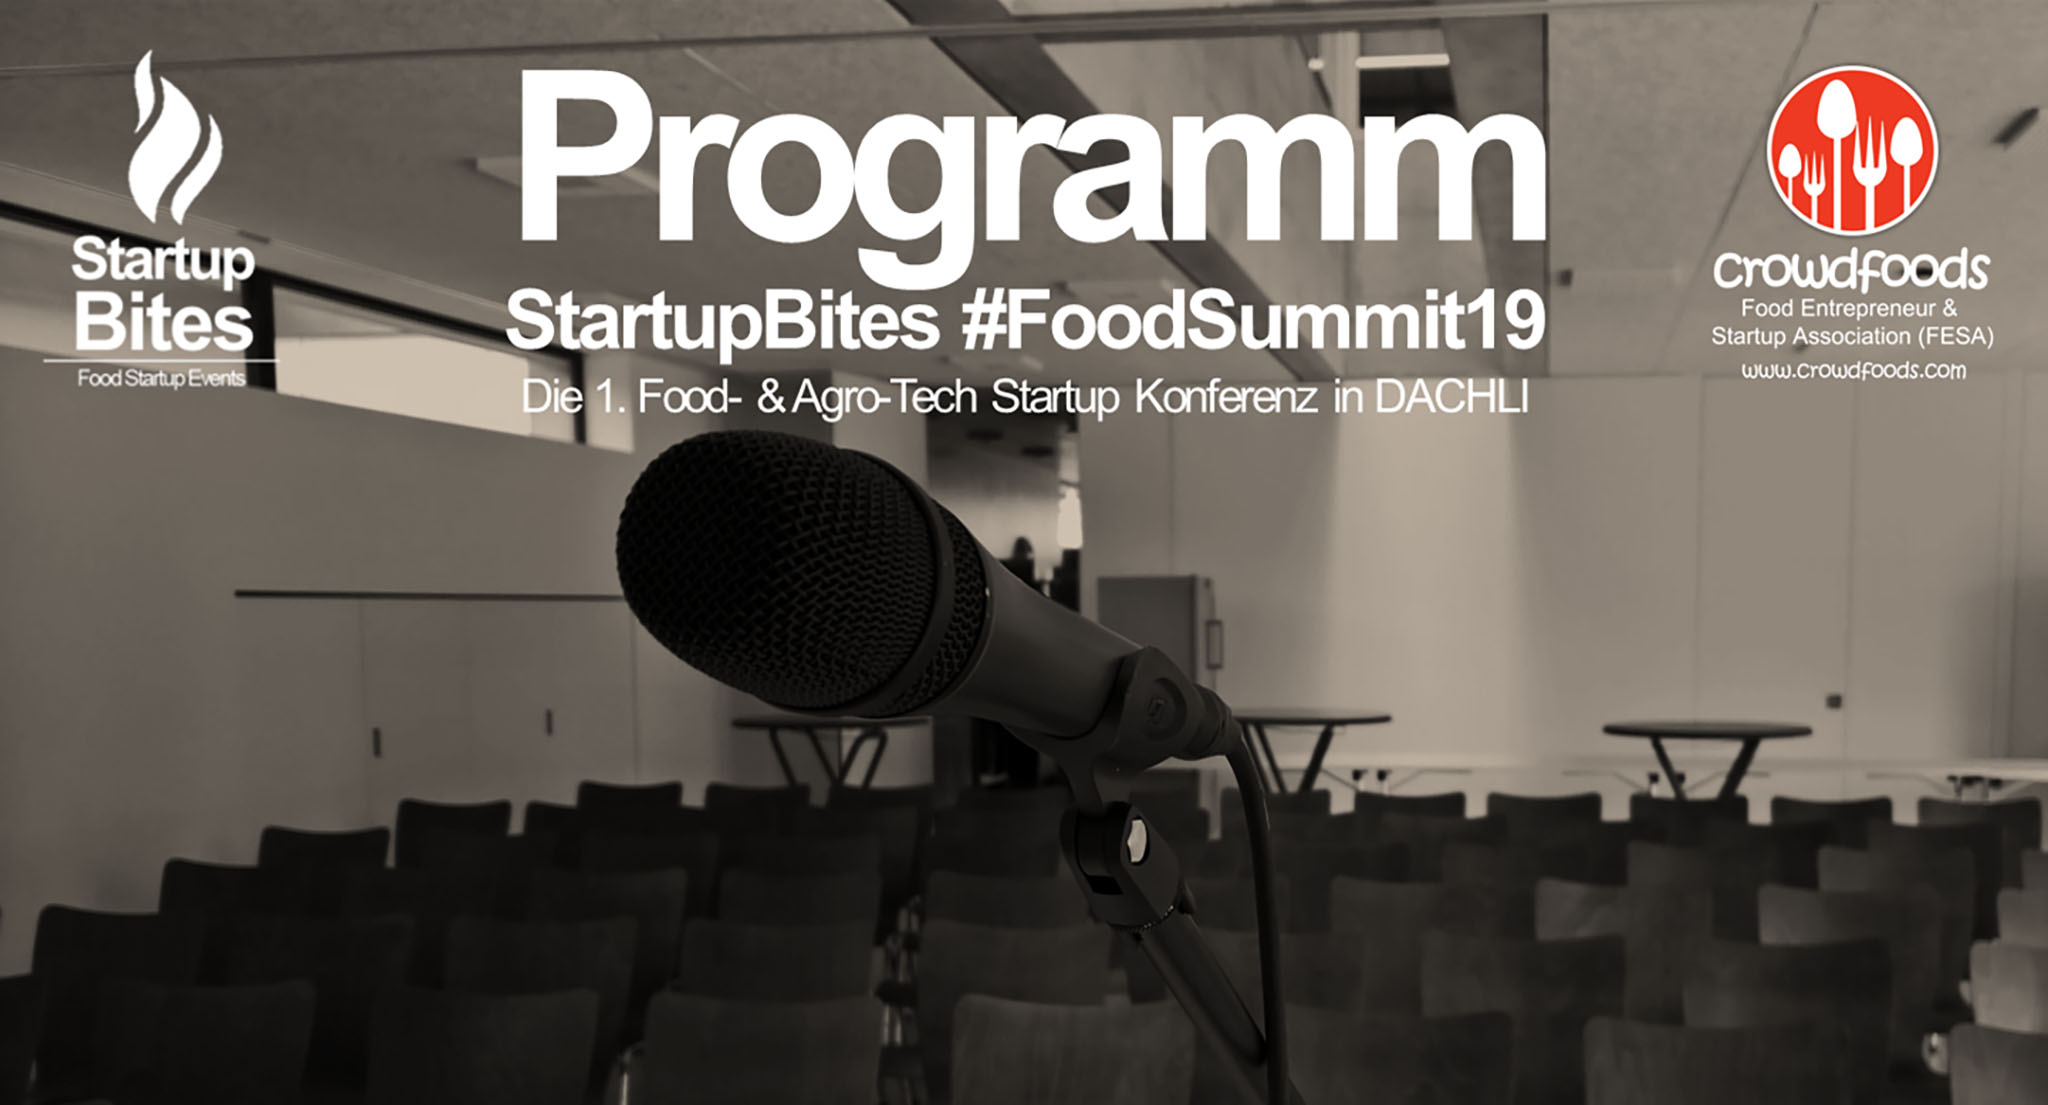 Programm StartupBites #FoodSummit19